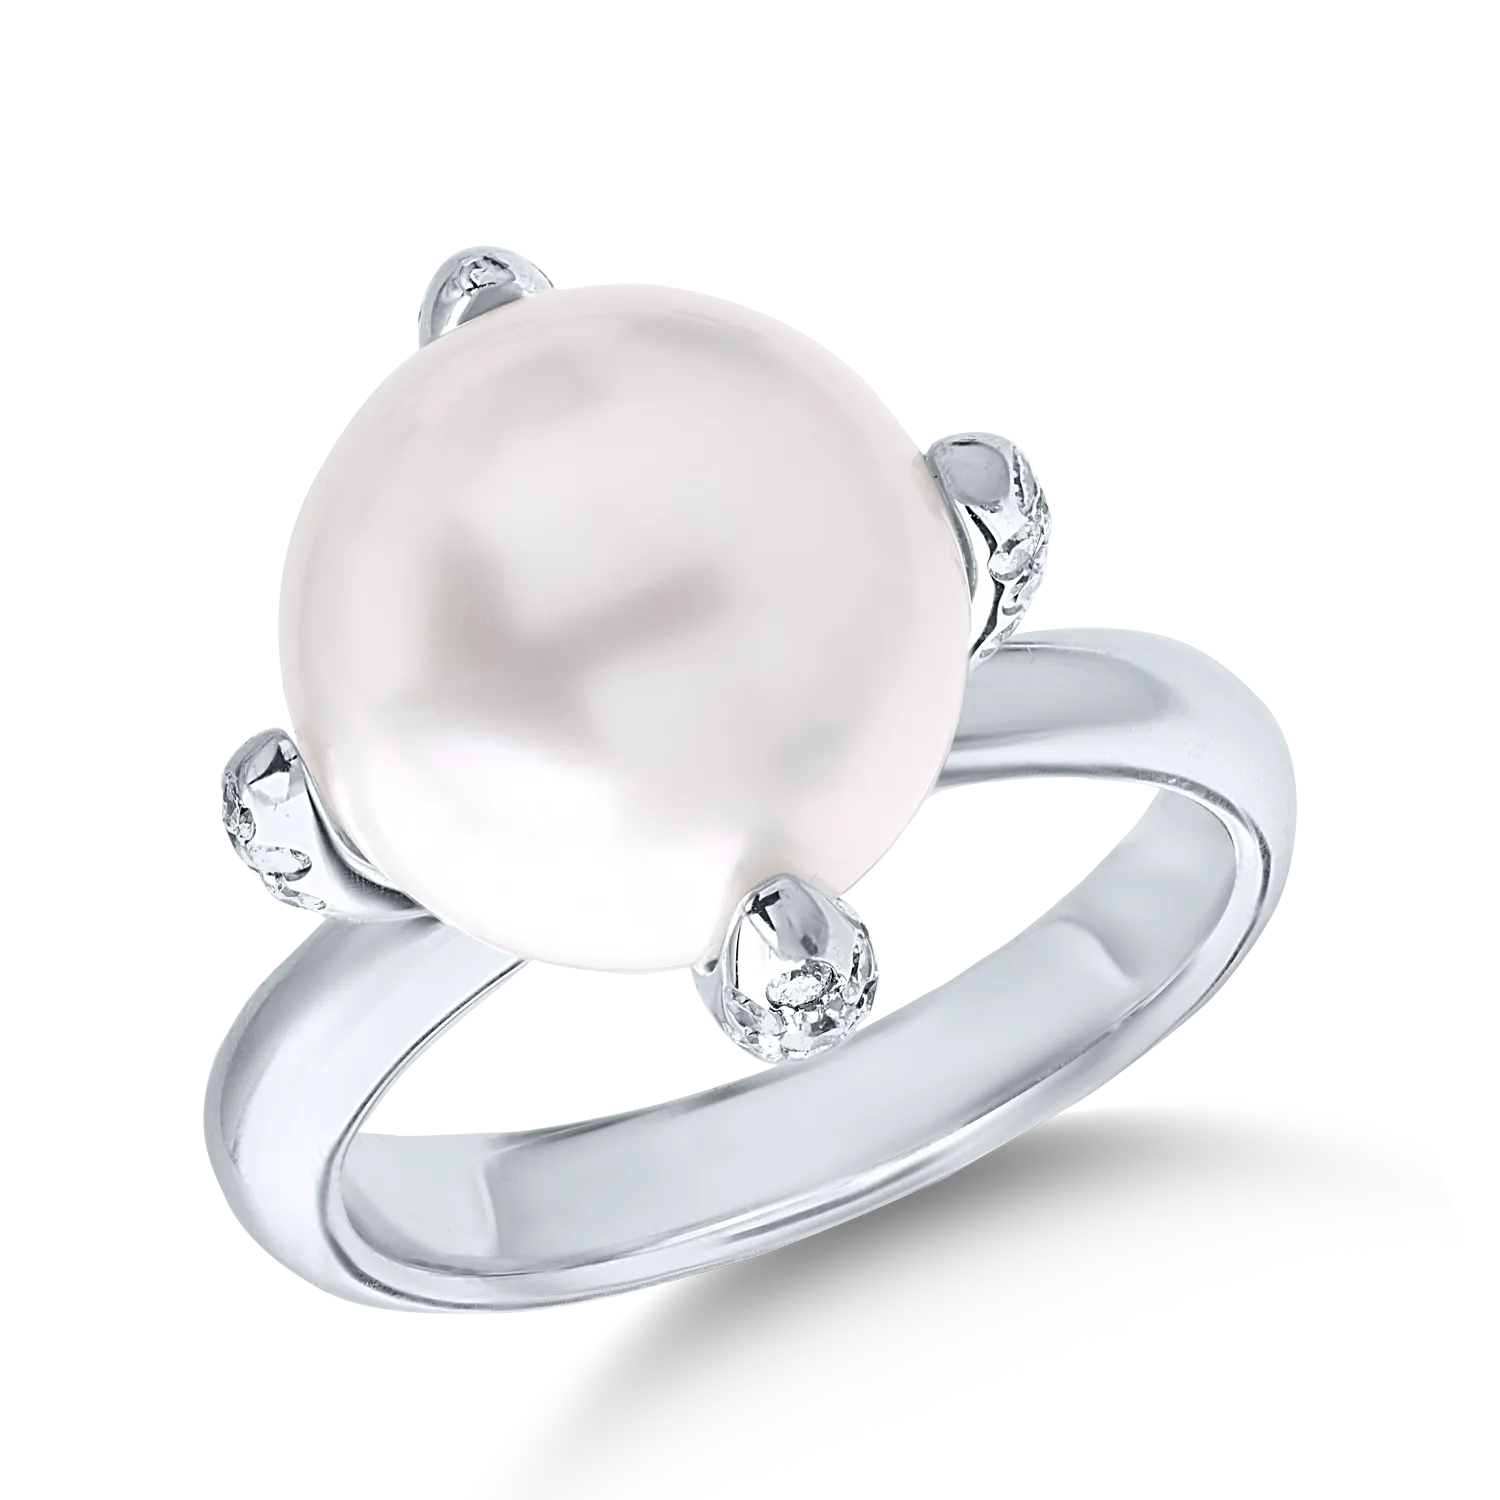 Inel din aur alb cu perla australiana de 12.01ct si diamante de 0.35ct